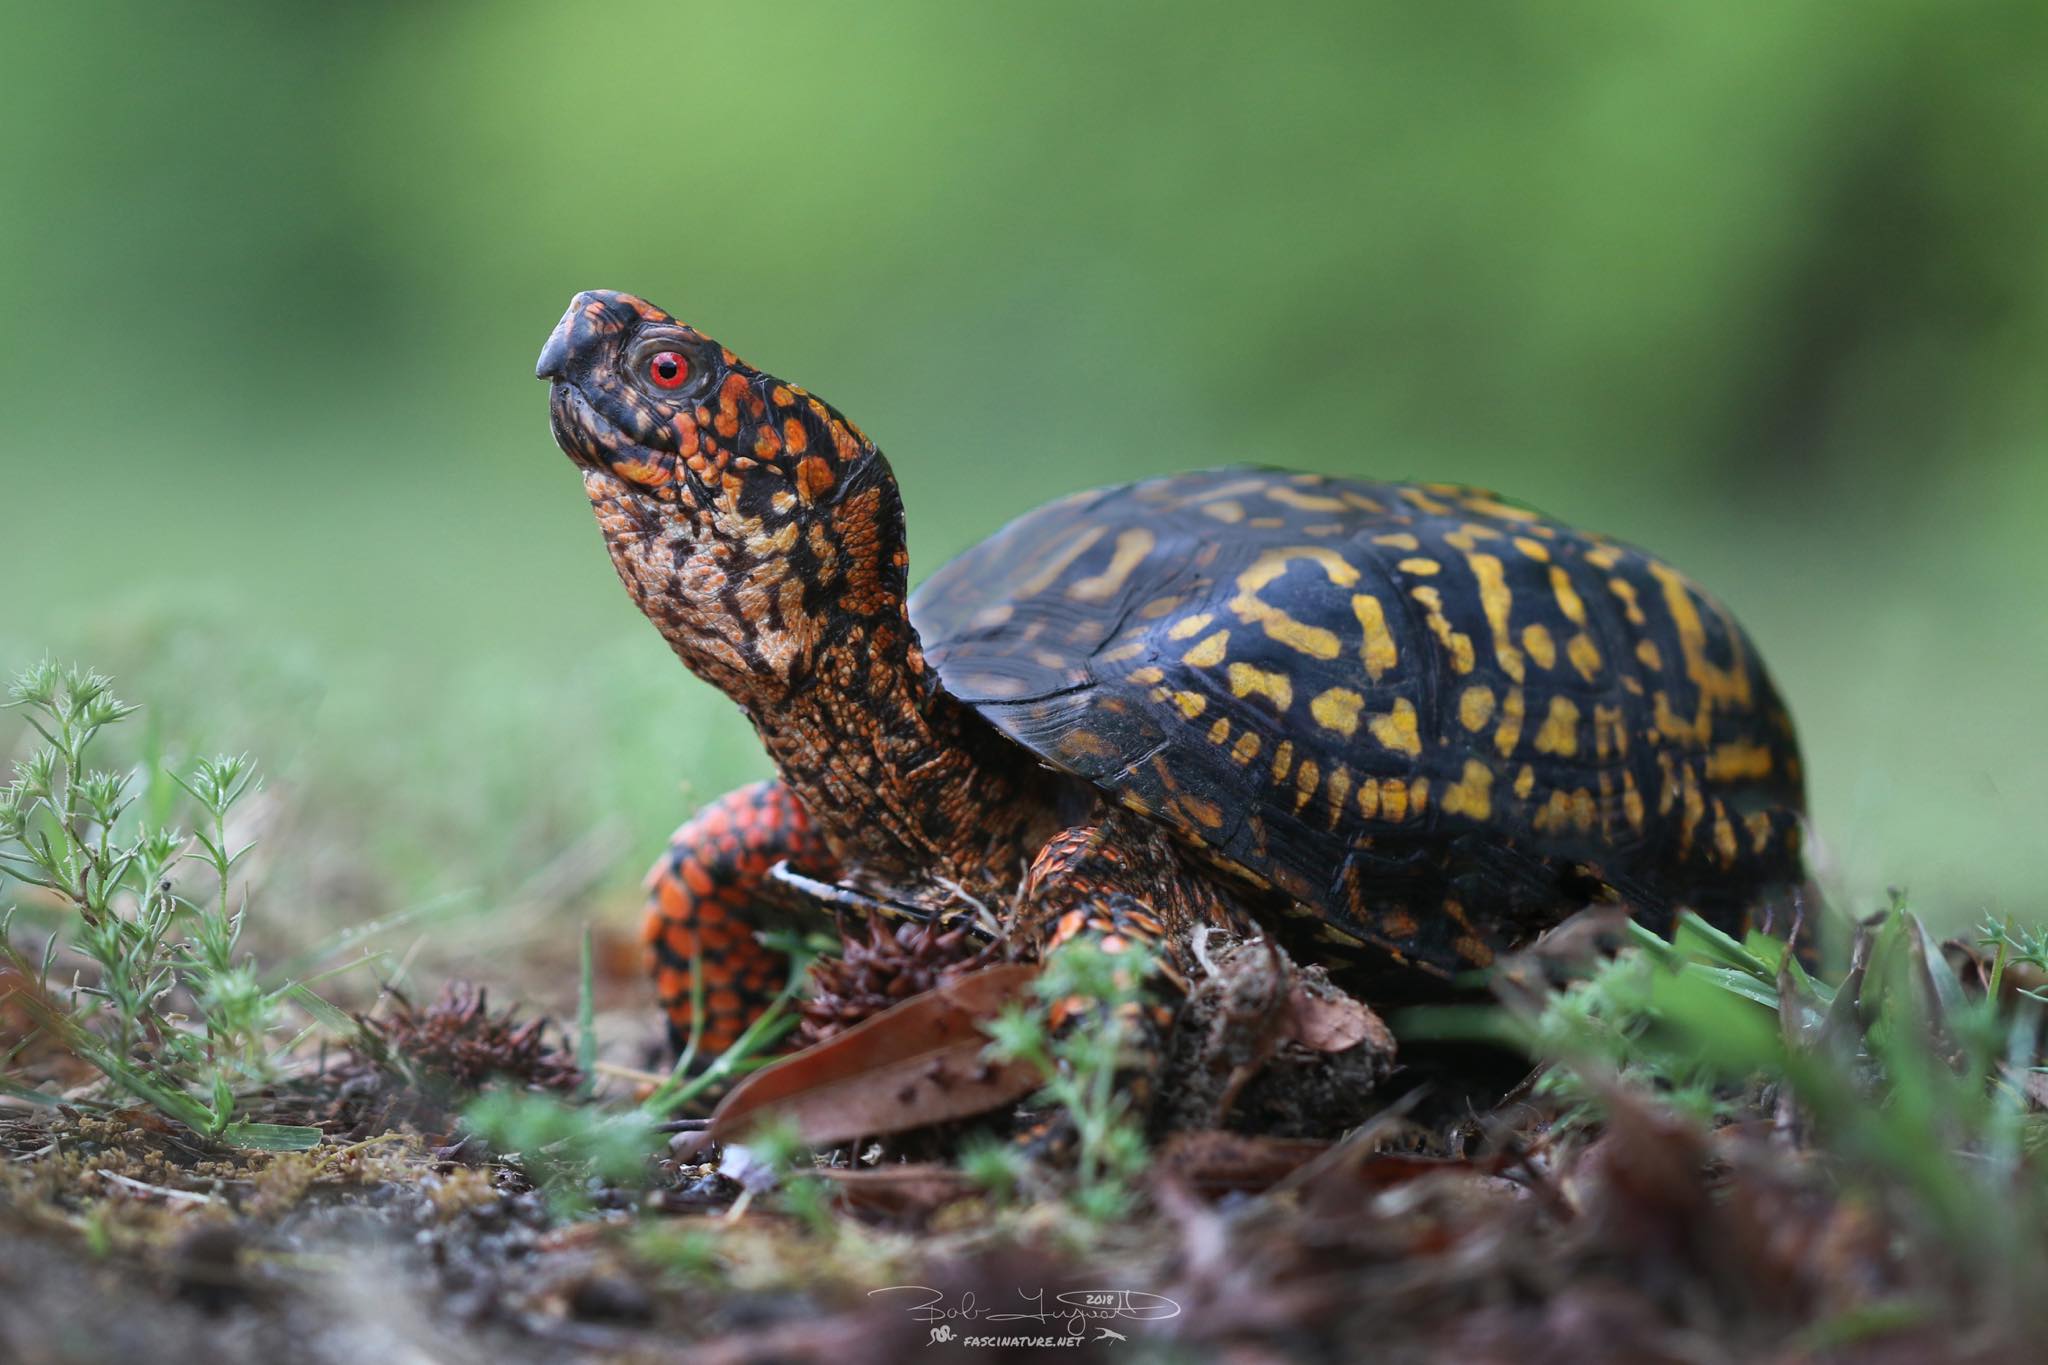 Eastern Box Turtle photo by Bob Ferguson